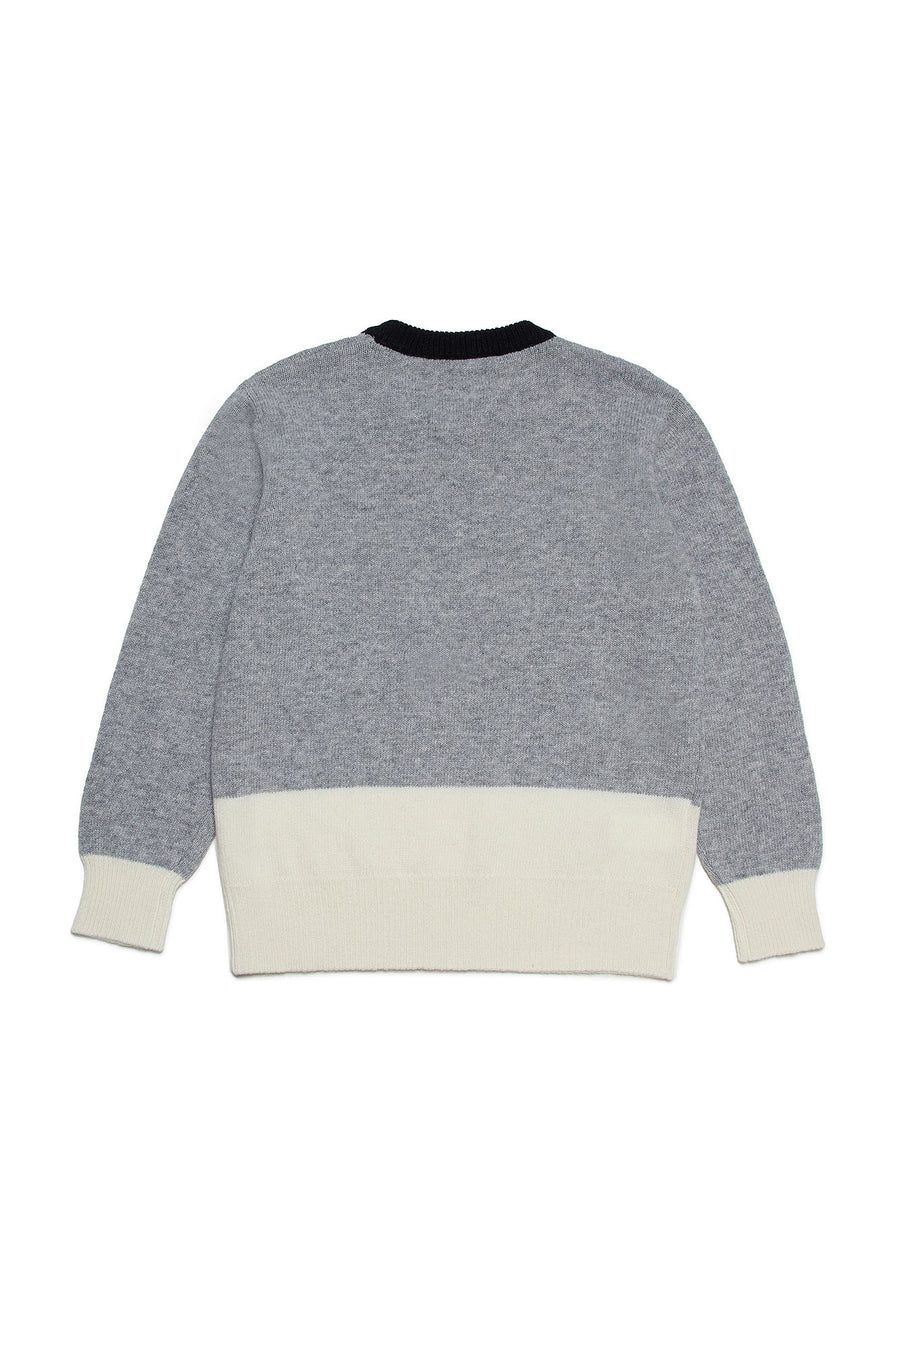 Knit grey sweater by Marni